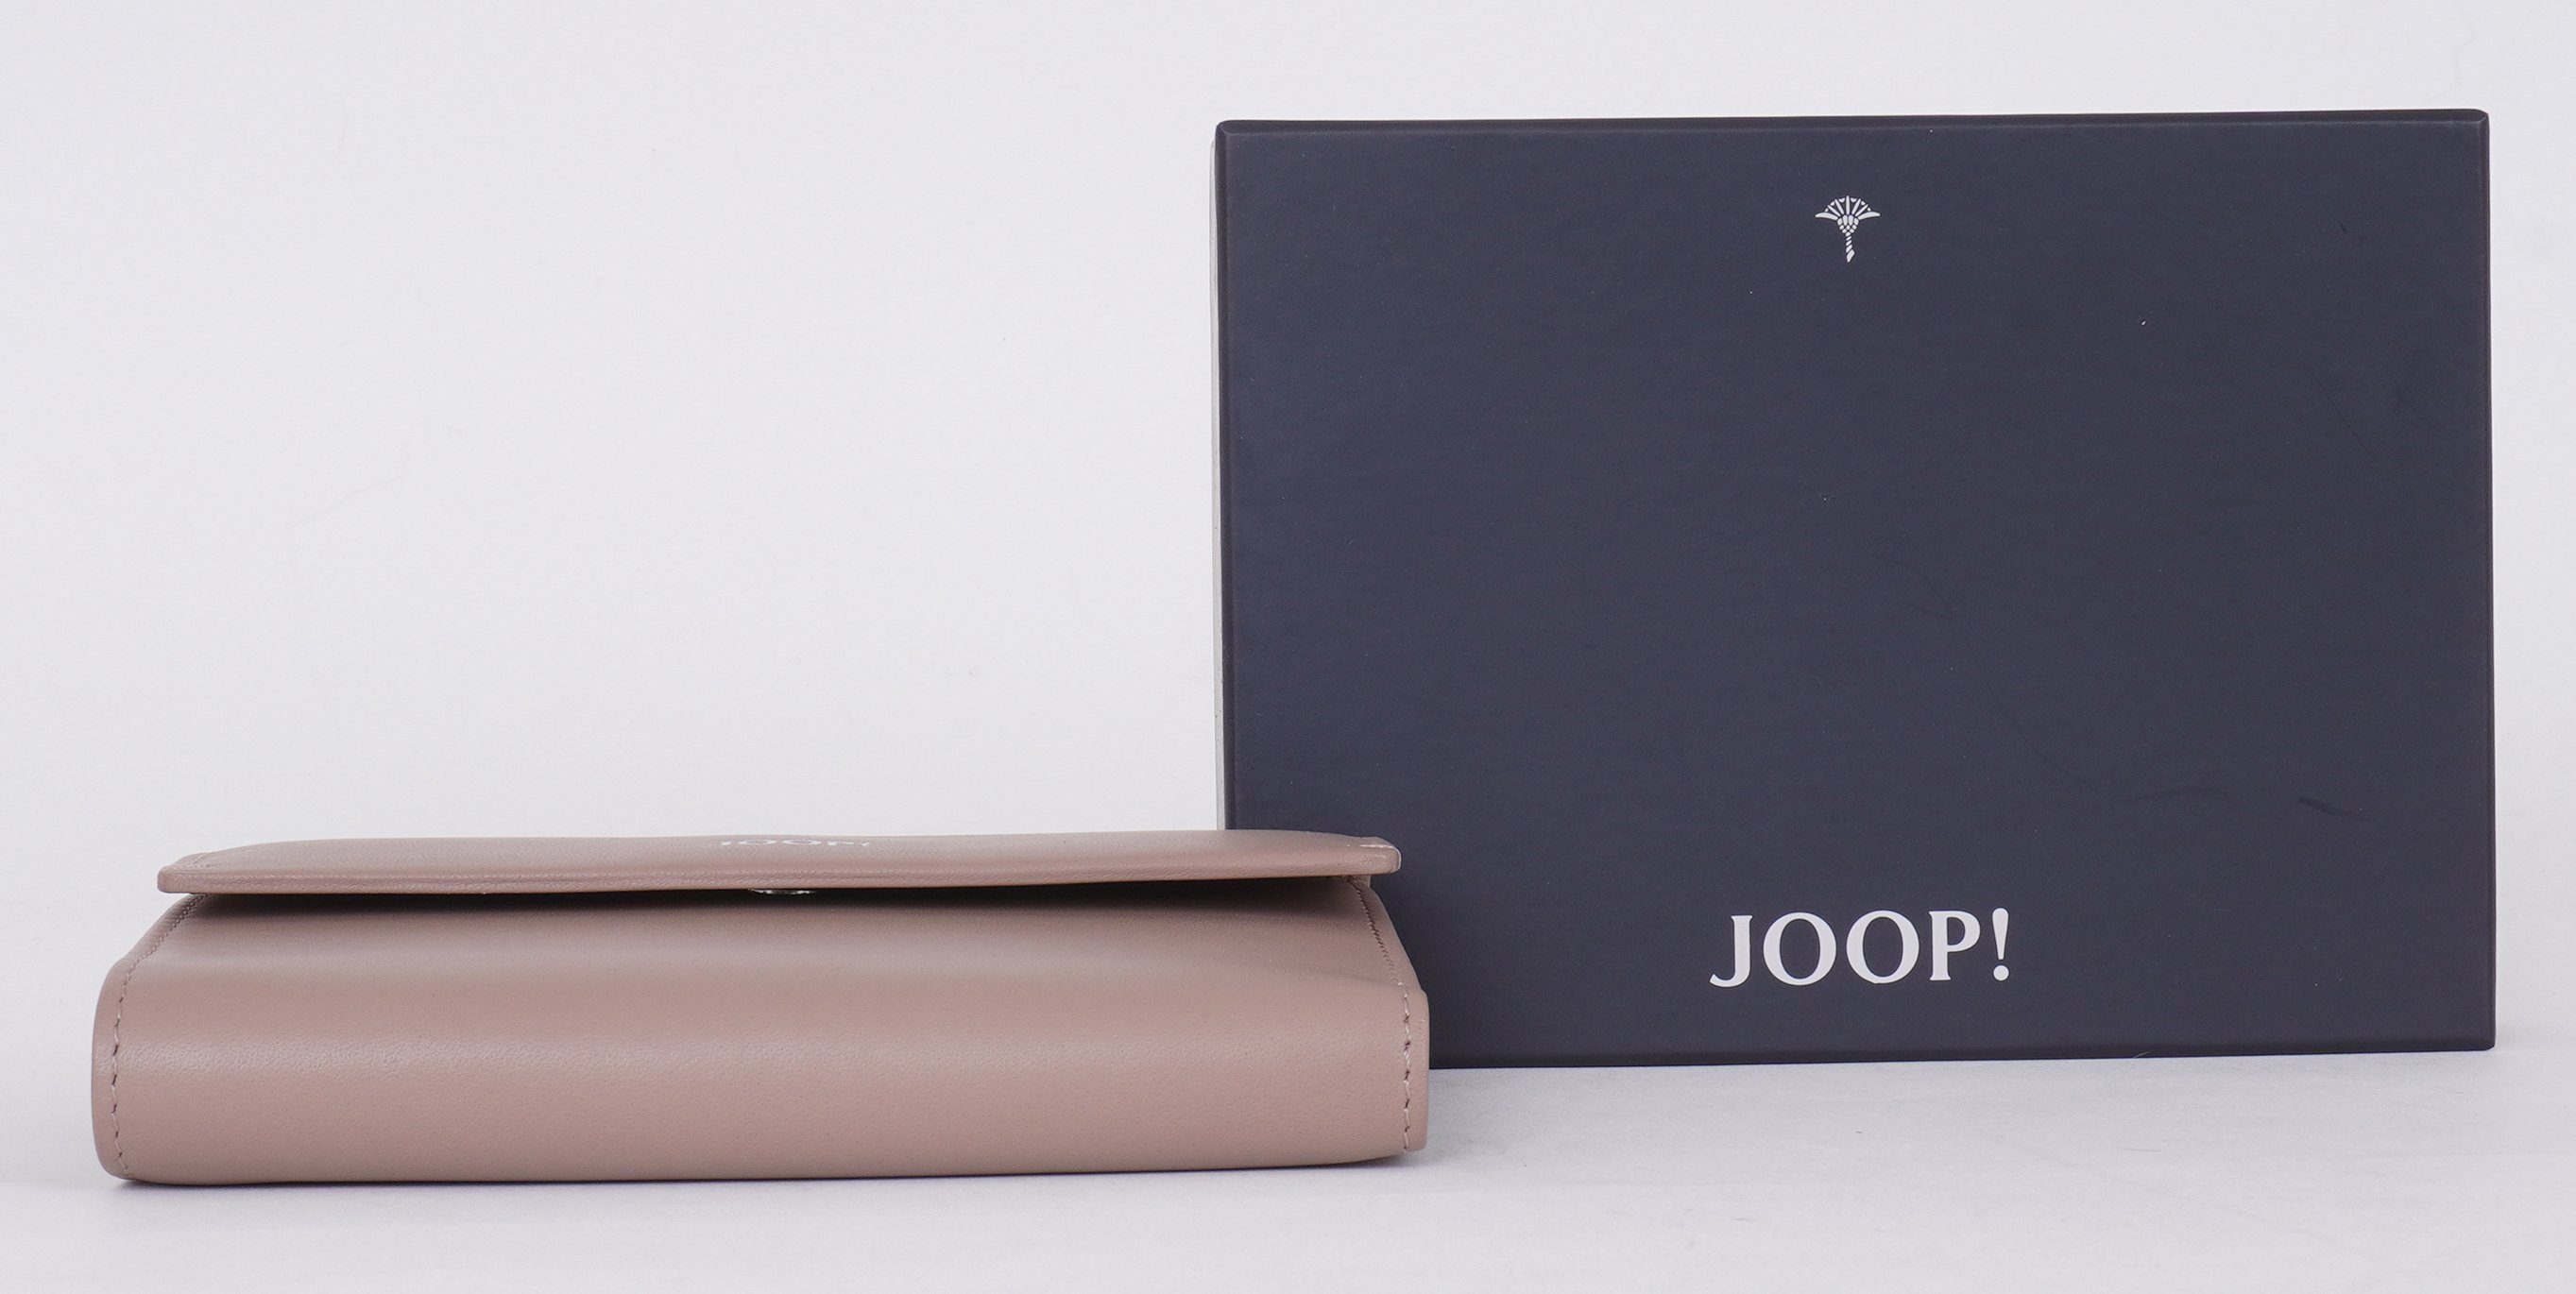 Joop! Geldbörse sofisticato 1.0 cosma mh10f, in Design rosa schlichtem purse